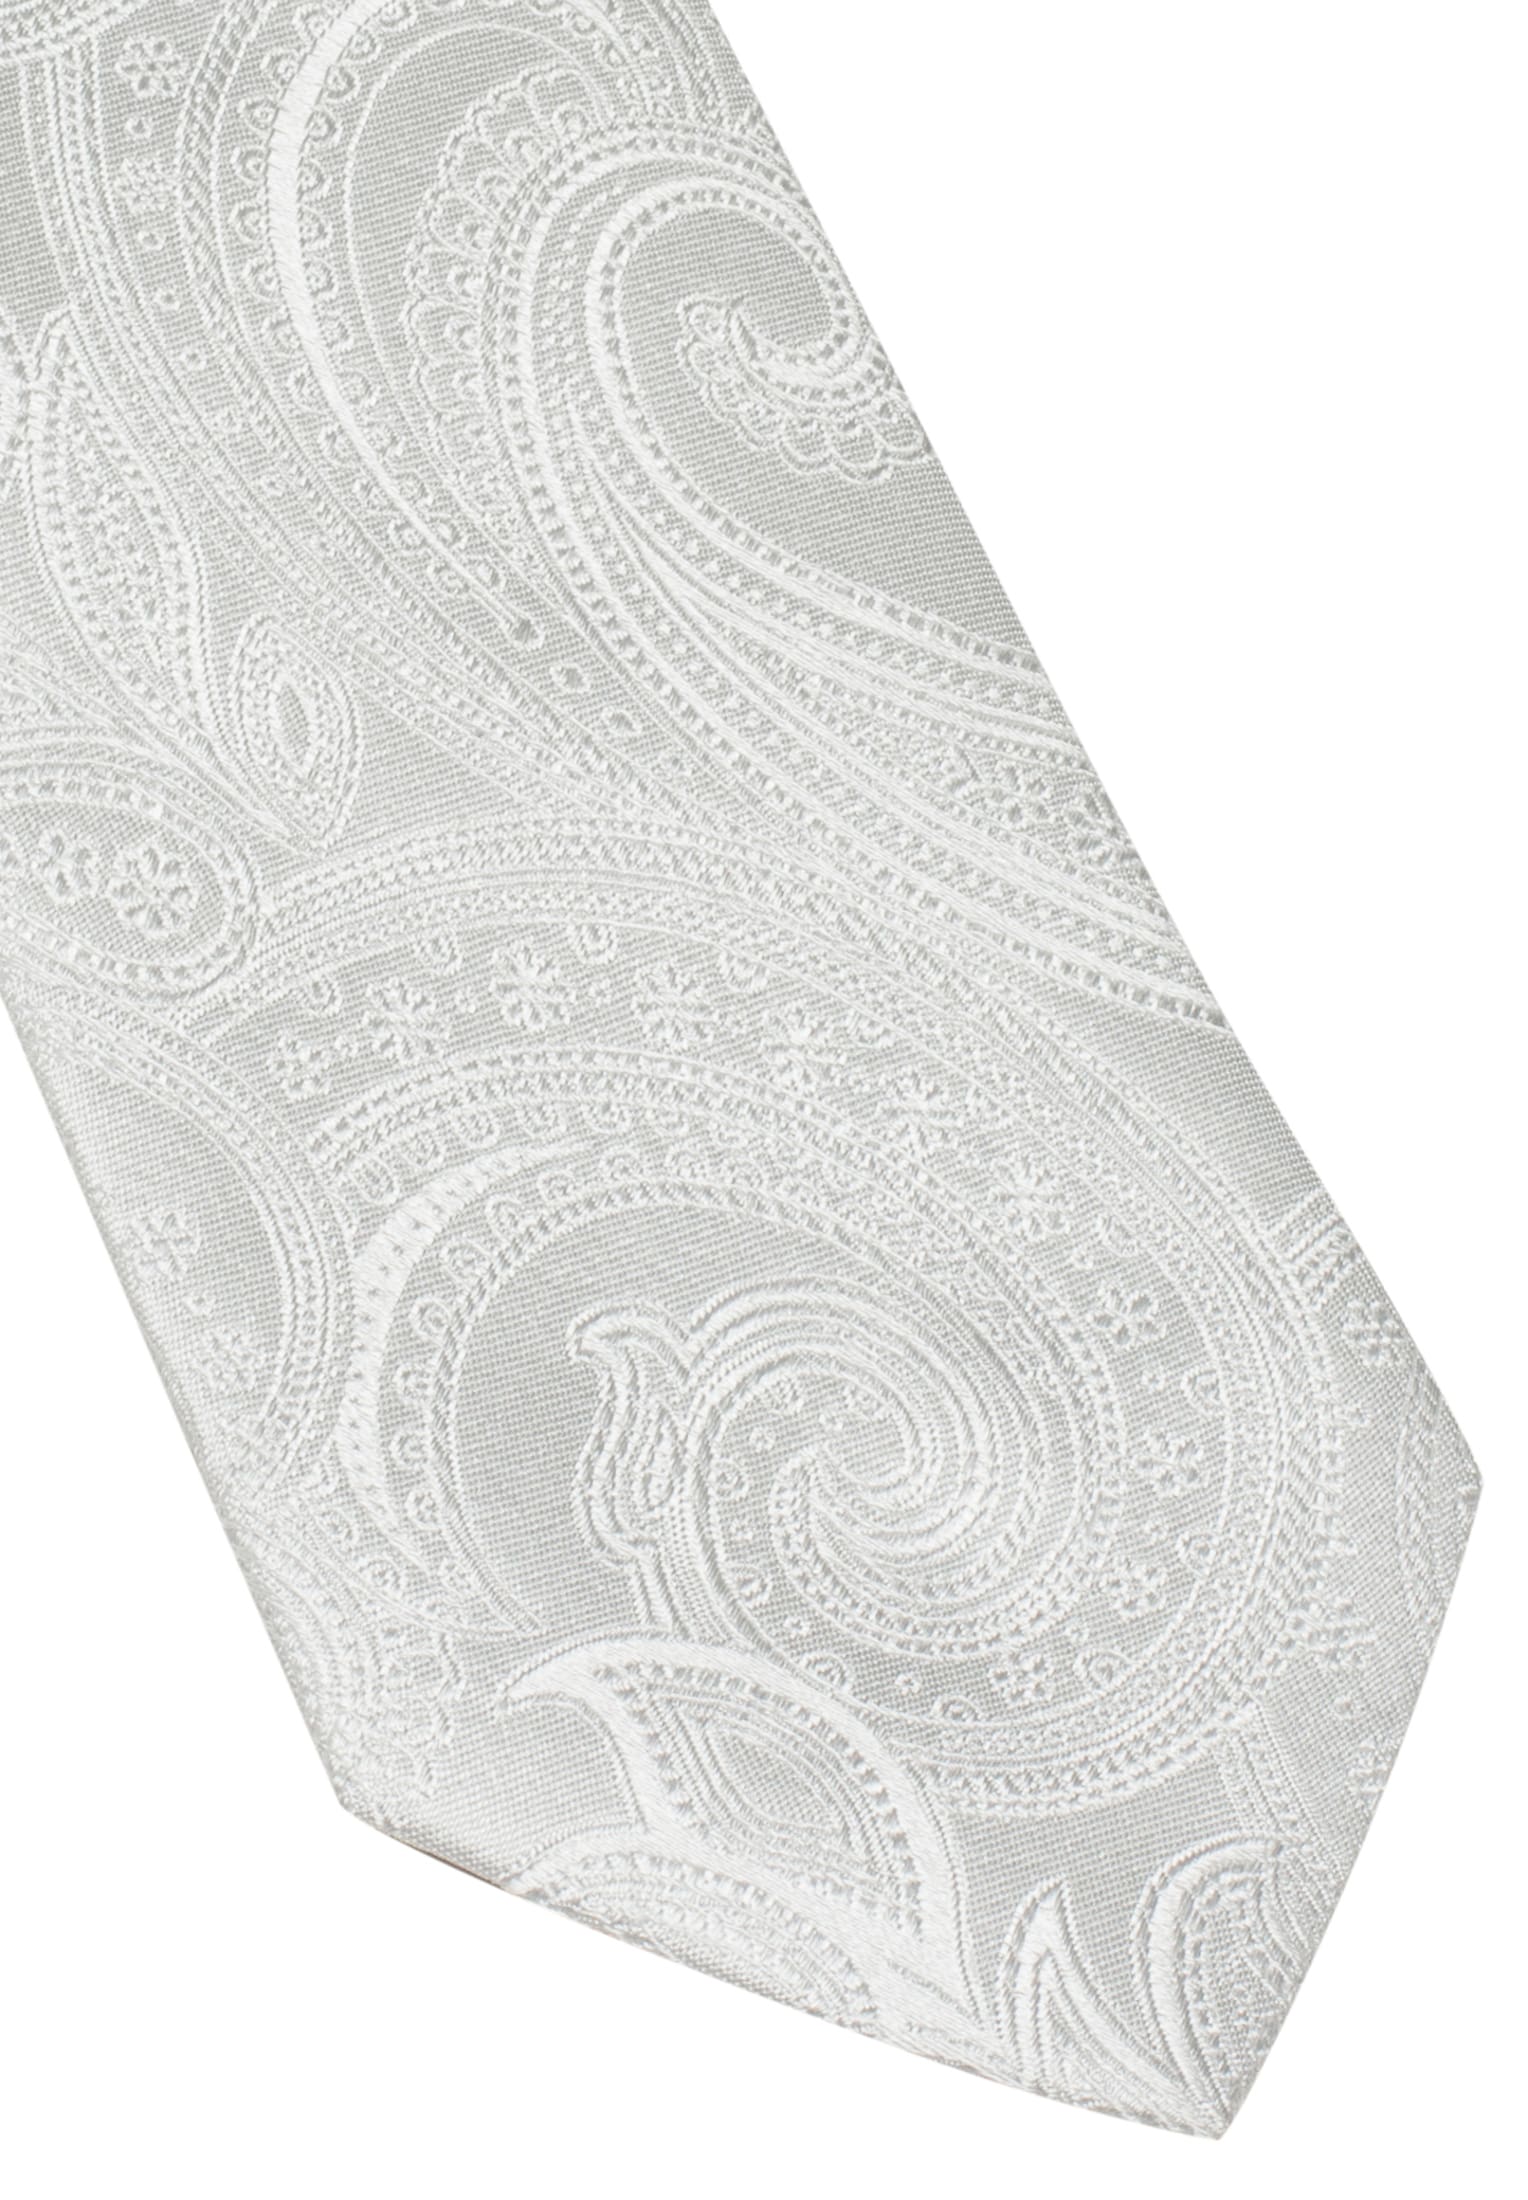 Krawatte in silber gemustert